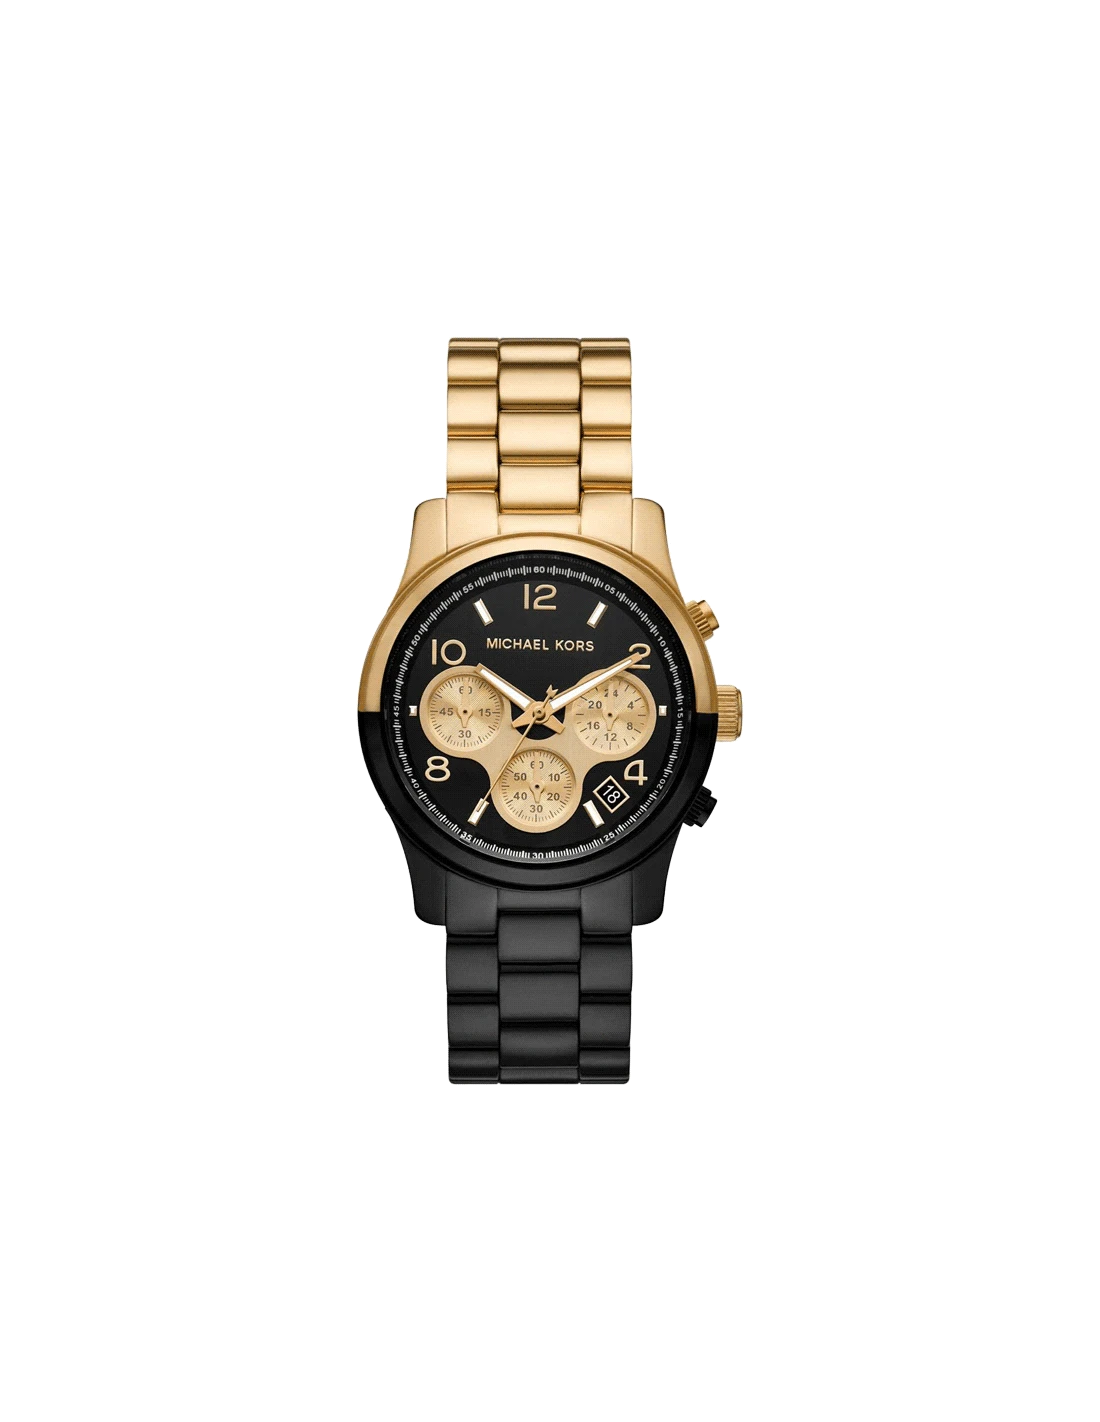 Michael Kors Slim Runway Black Tone Rf Watch Mk3221 latest offers on Michael  Kors jewels